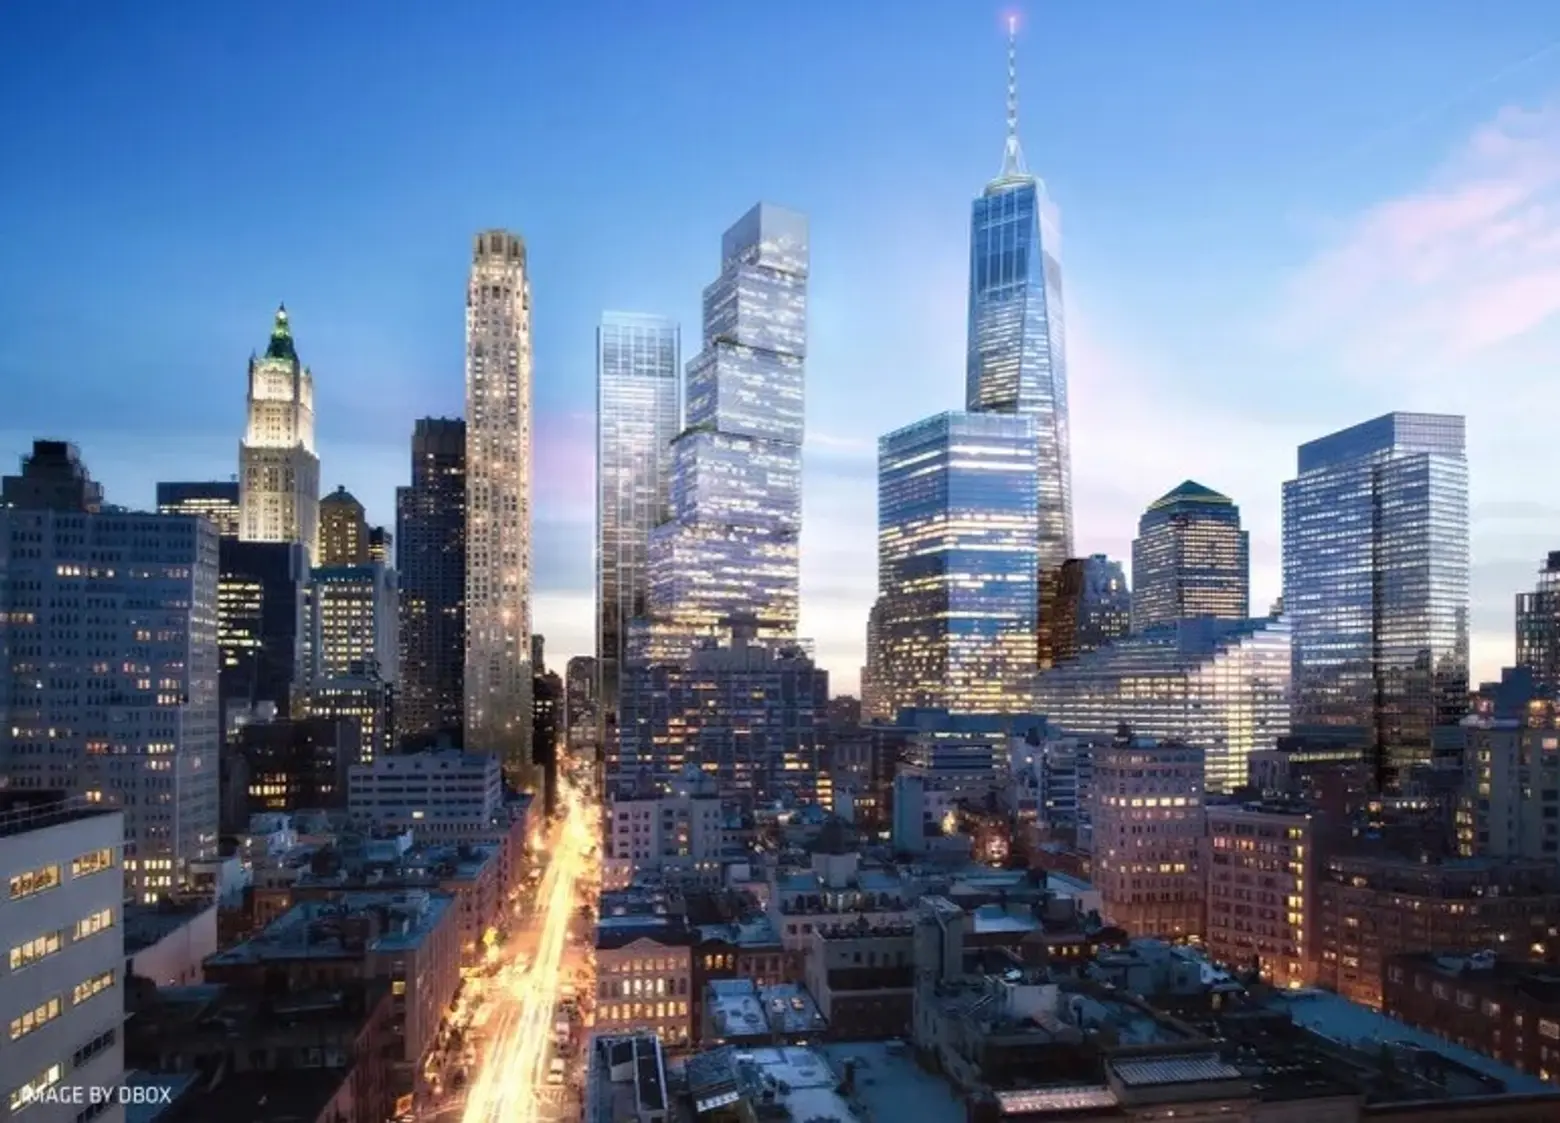 Bjarke Ingels Talks About His Design for 2 World Trade Center